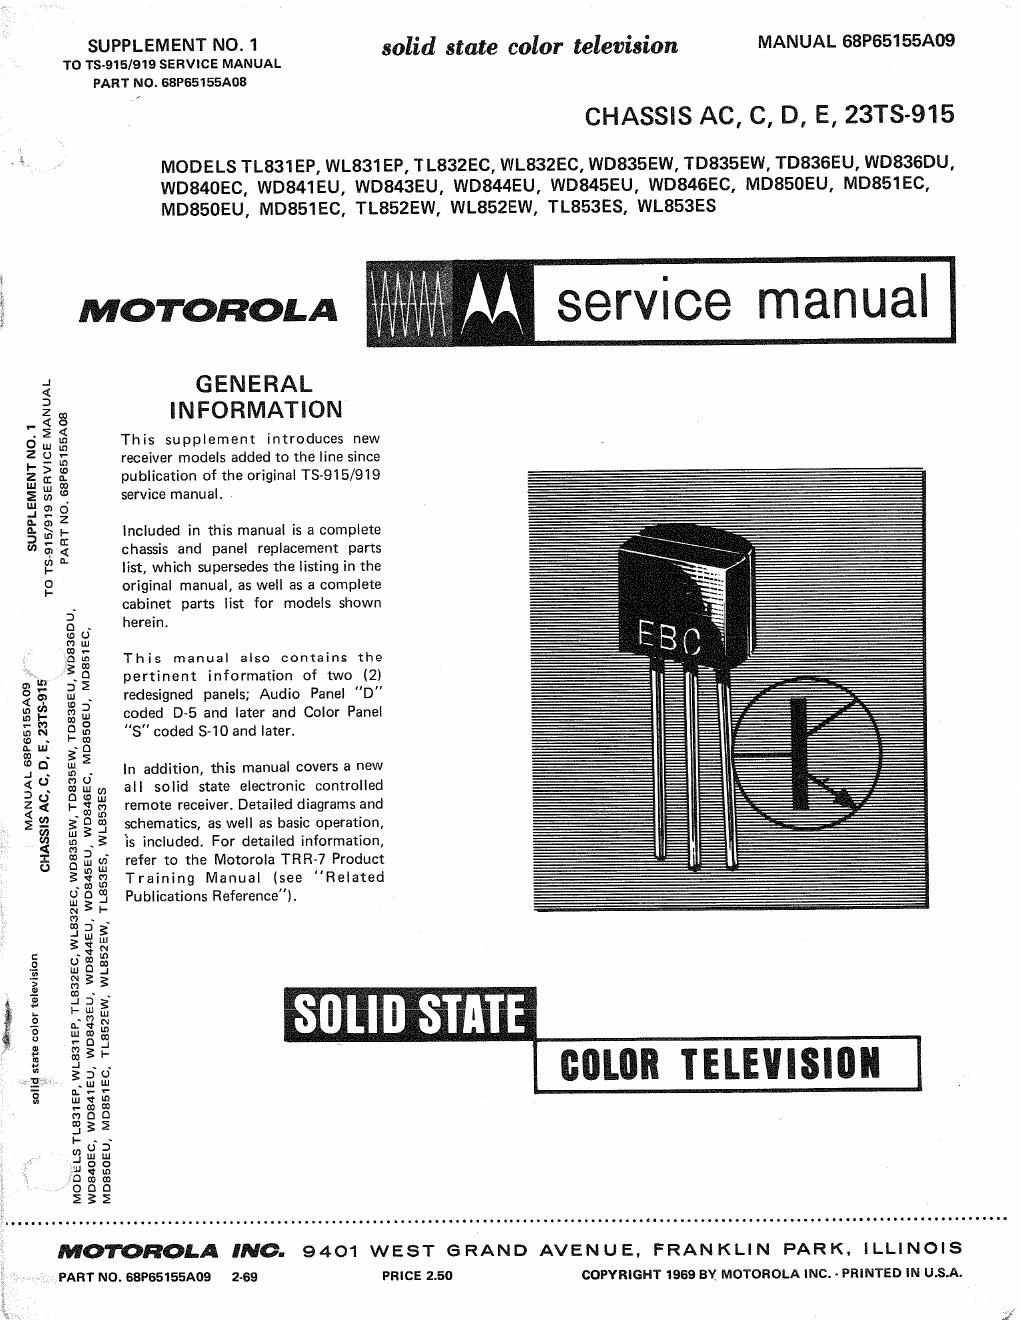 motorola wd 840 ec service manual